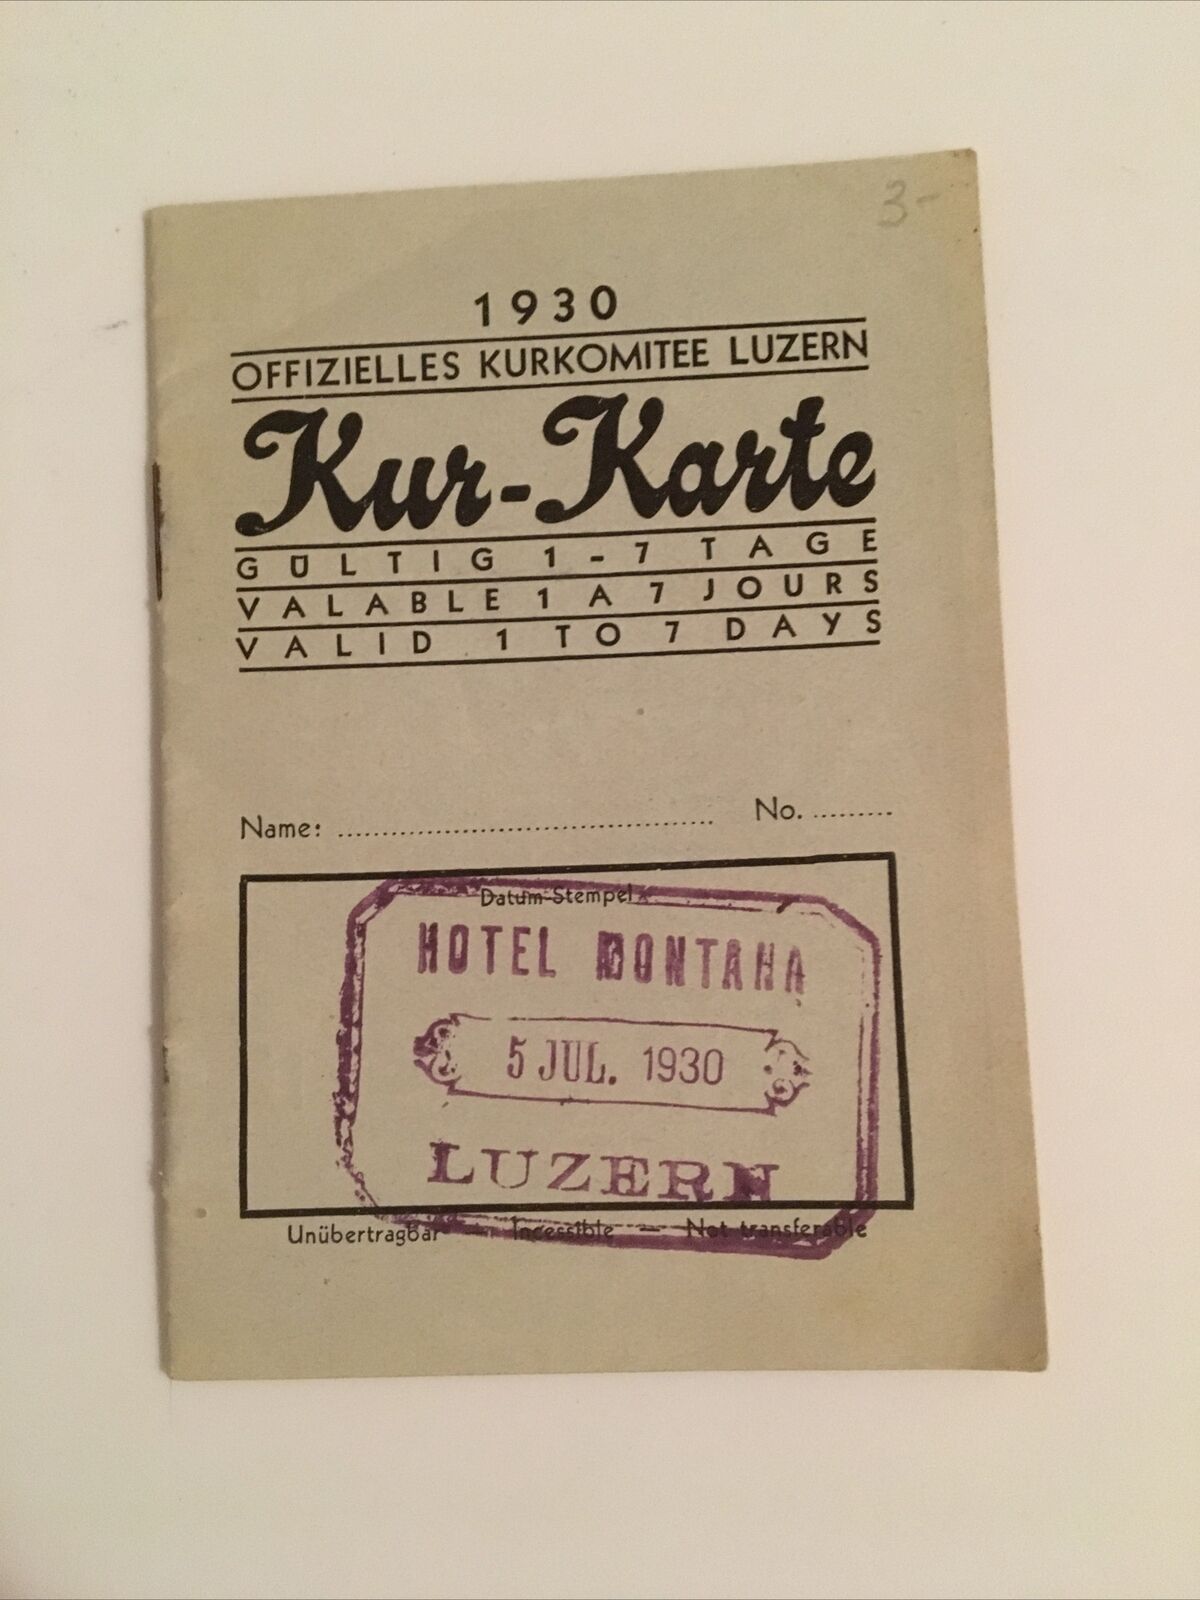 July 1930 Luzern Switzerland Kur-Karte Schiller Grand Hotel Brochure Great Shape